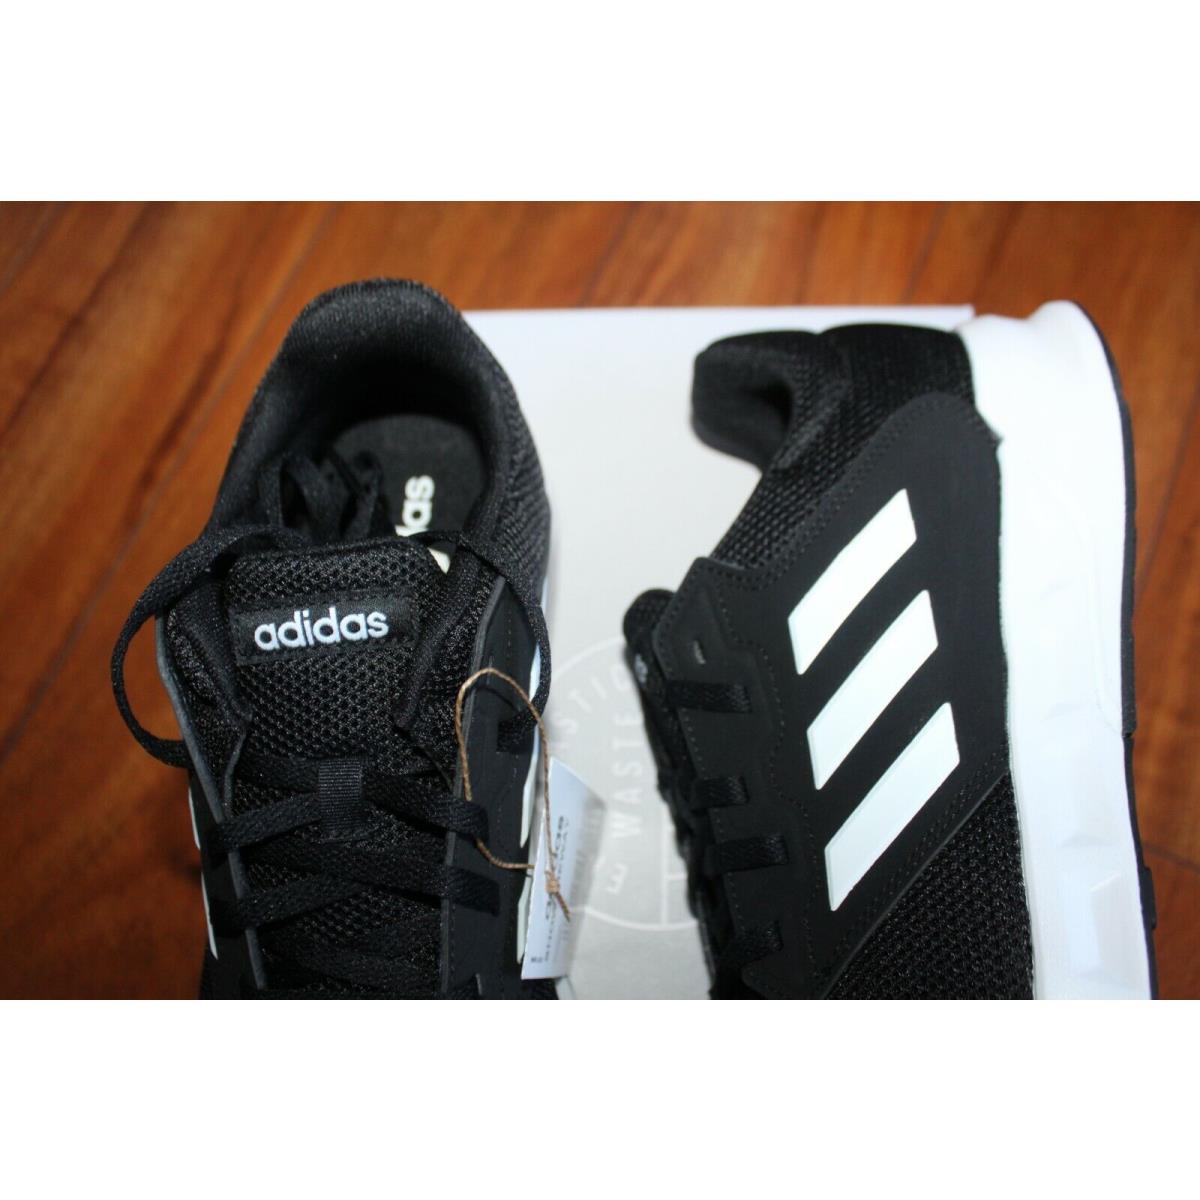 Adidas shoes SHOWTHEWAY - Black 0